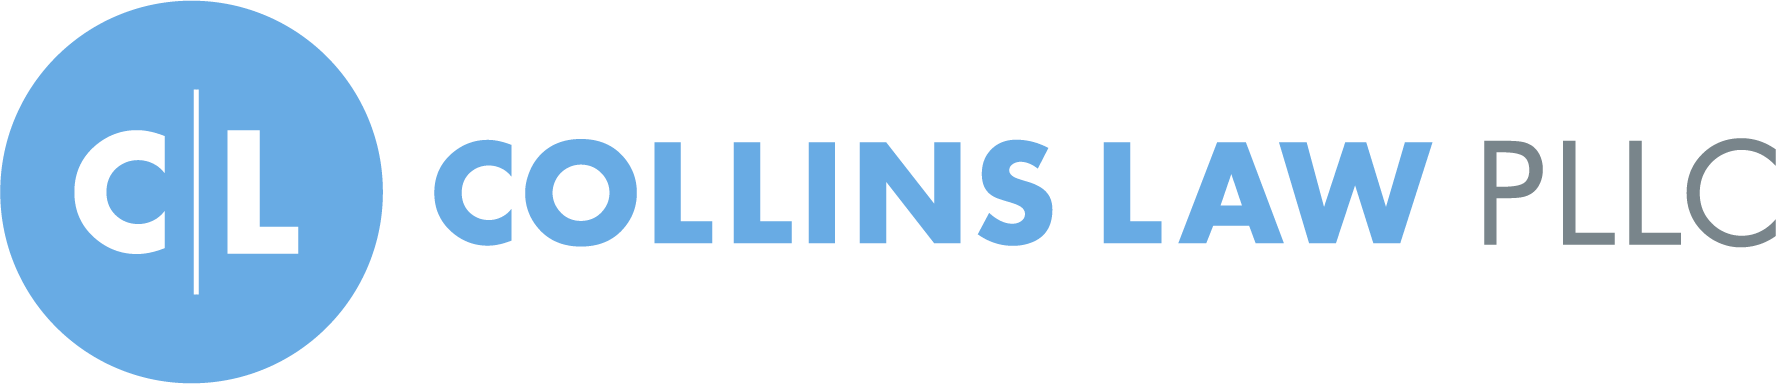 Collins Law PLLC